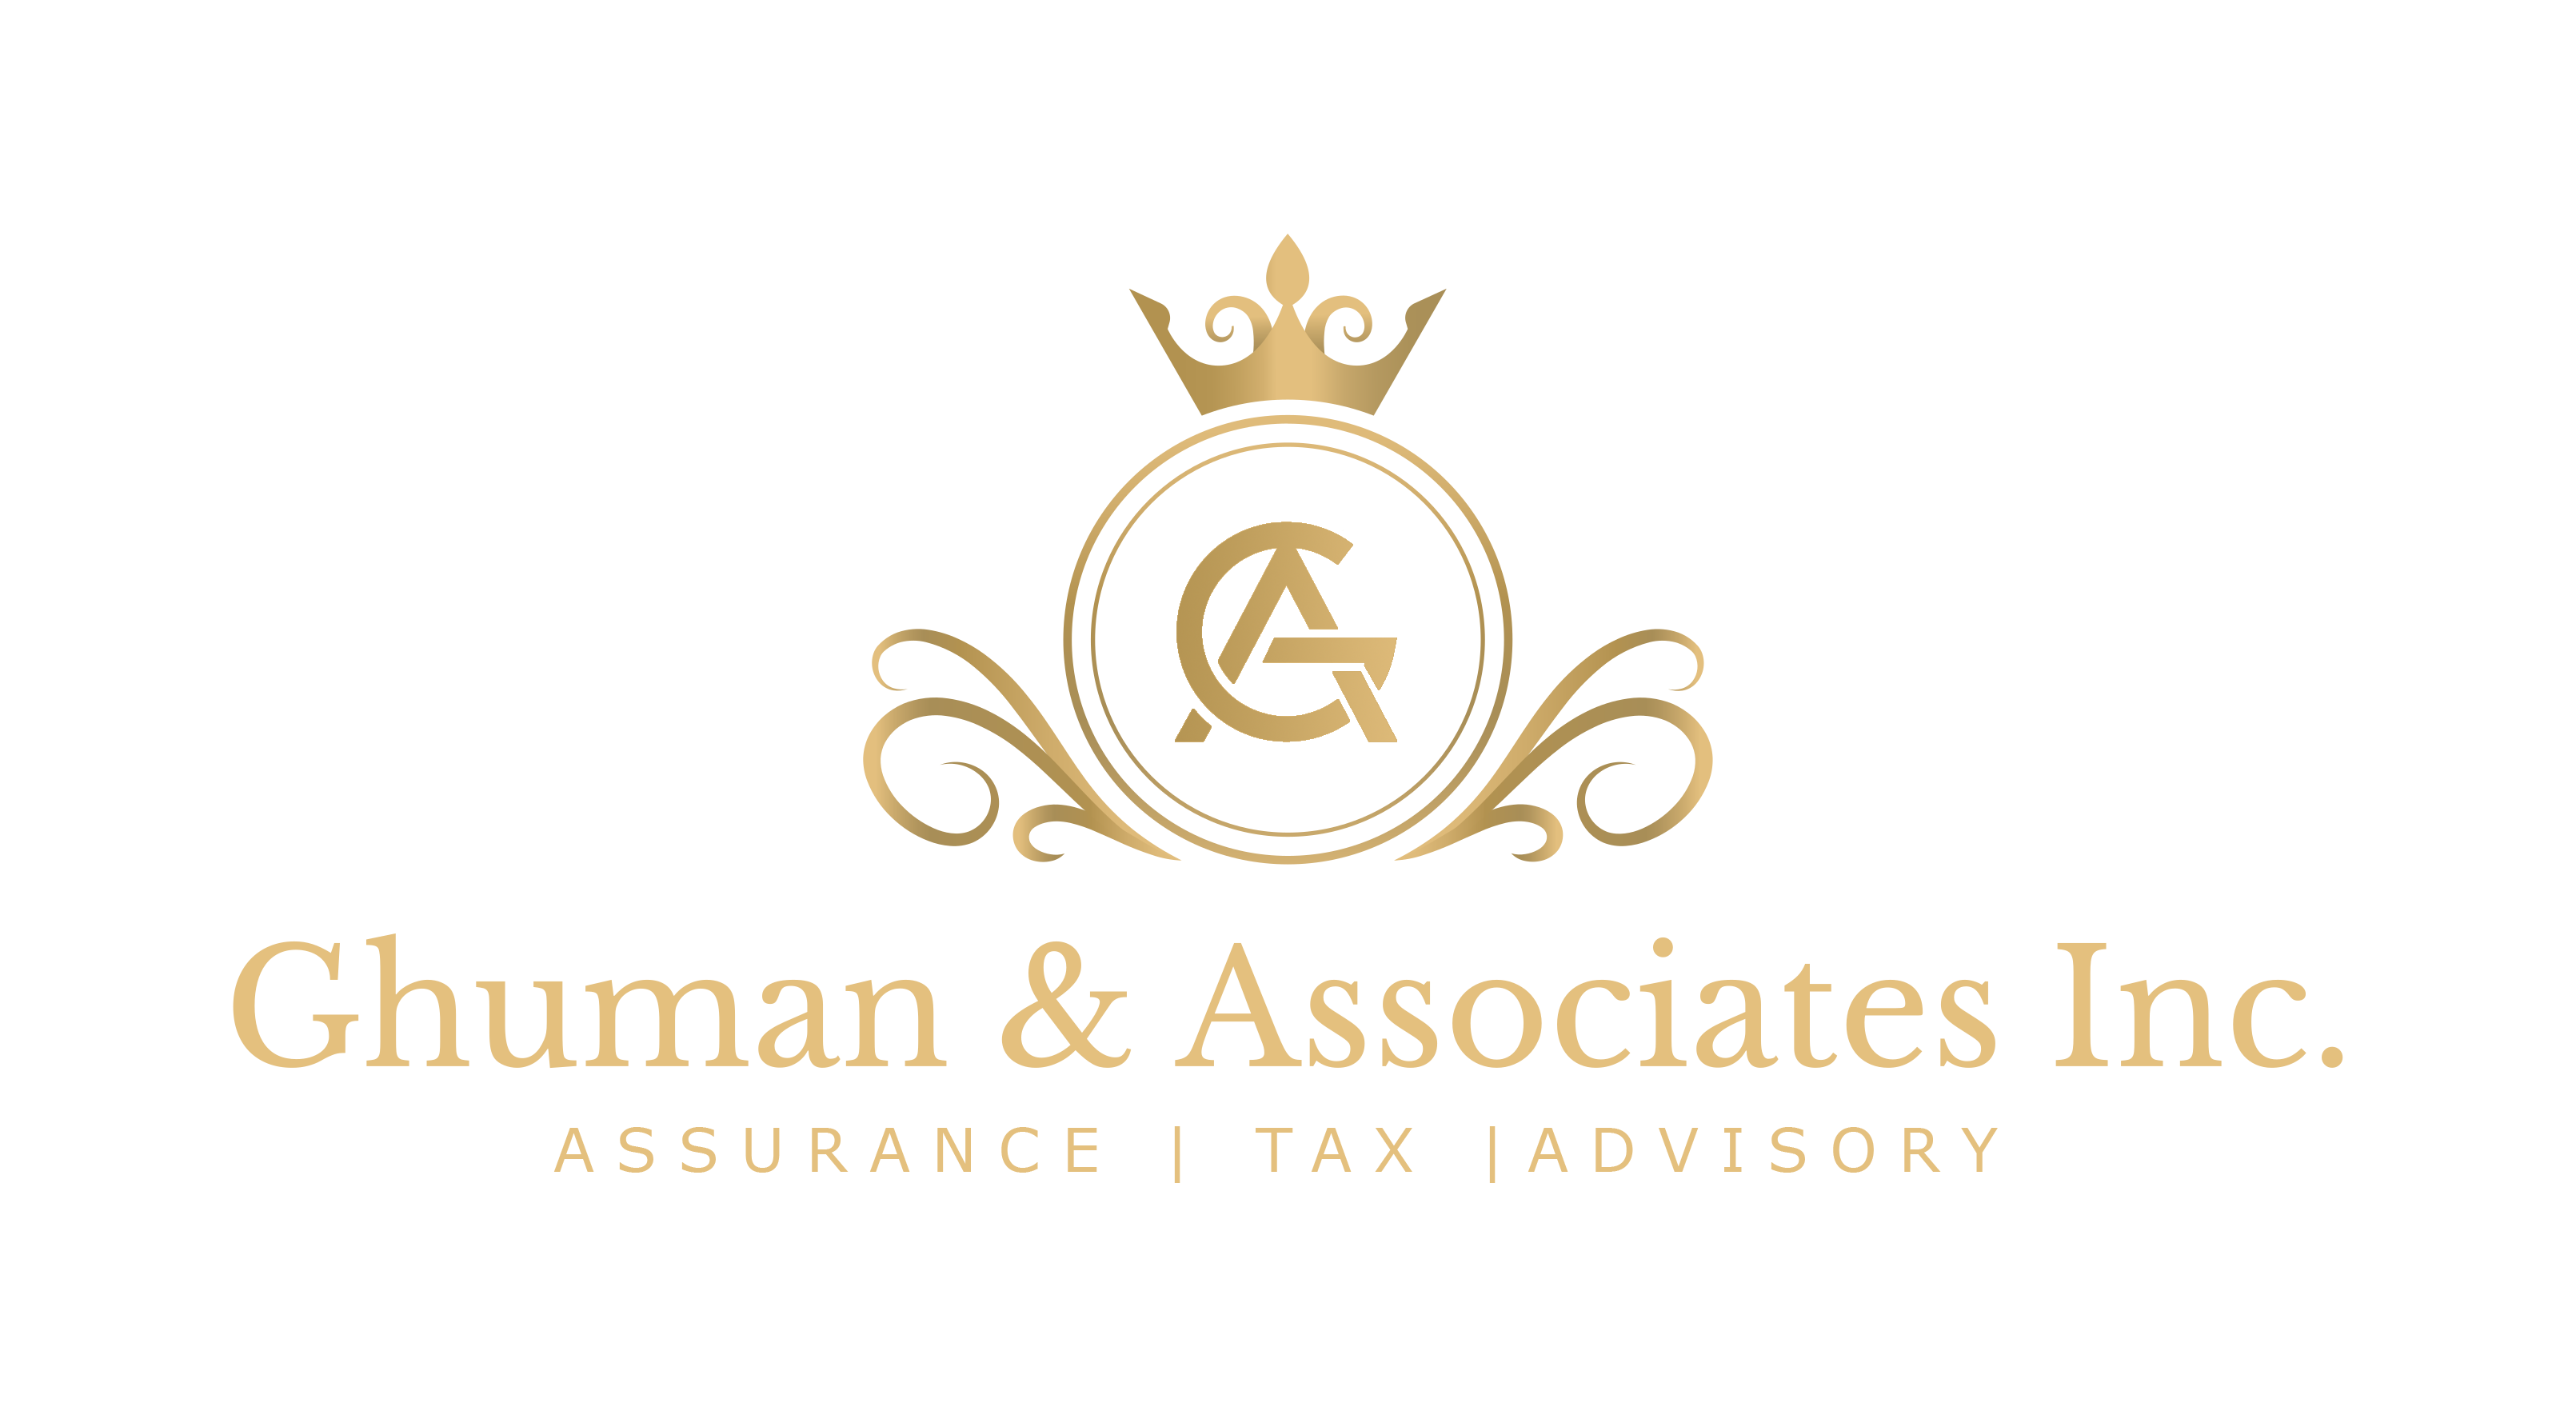 Ghuman & Associates Inc